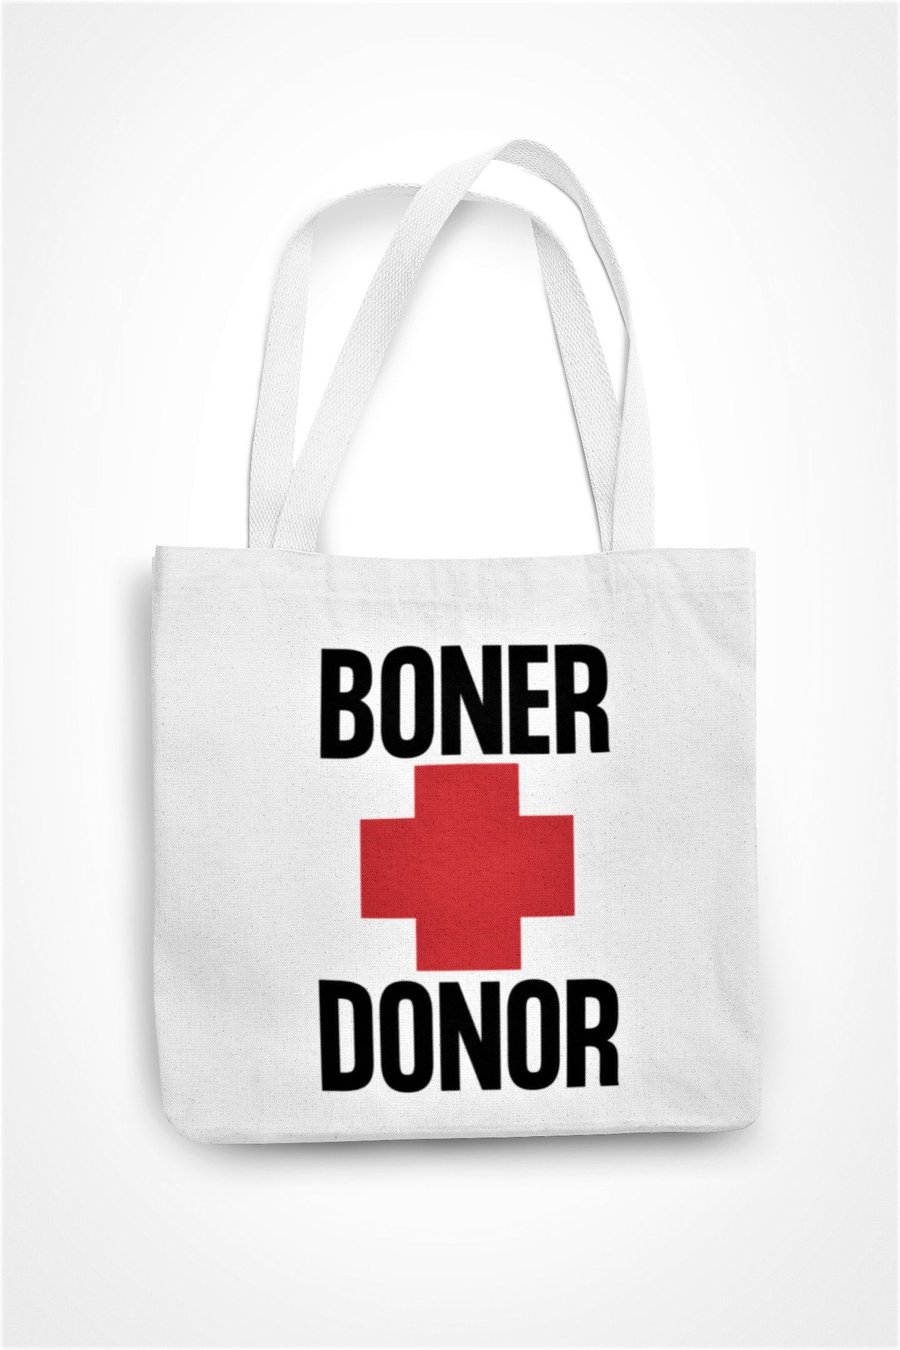 Boner Donor Novelty Tote Bag Eco Friendly Shopping Bag Rude Funny Gift Joke 